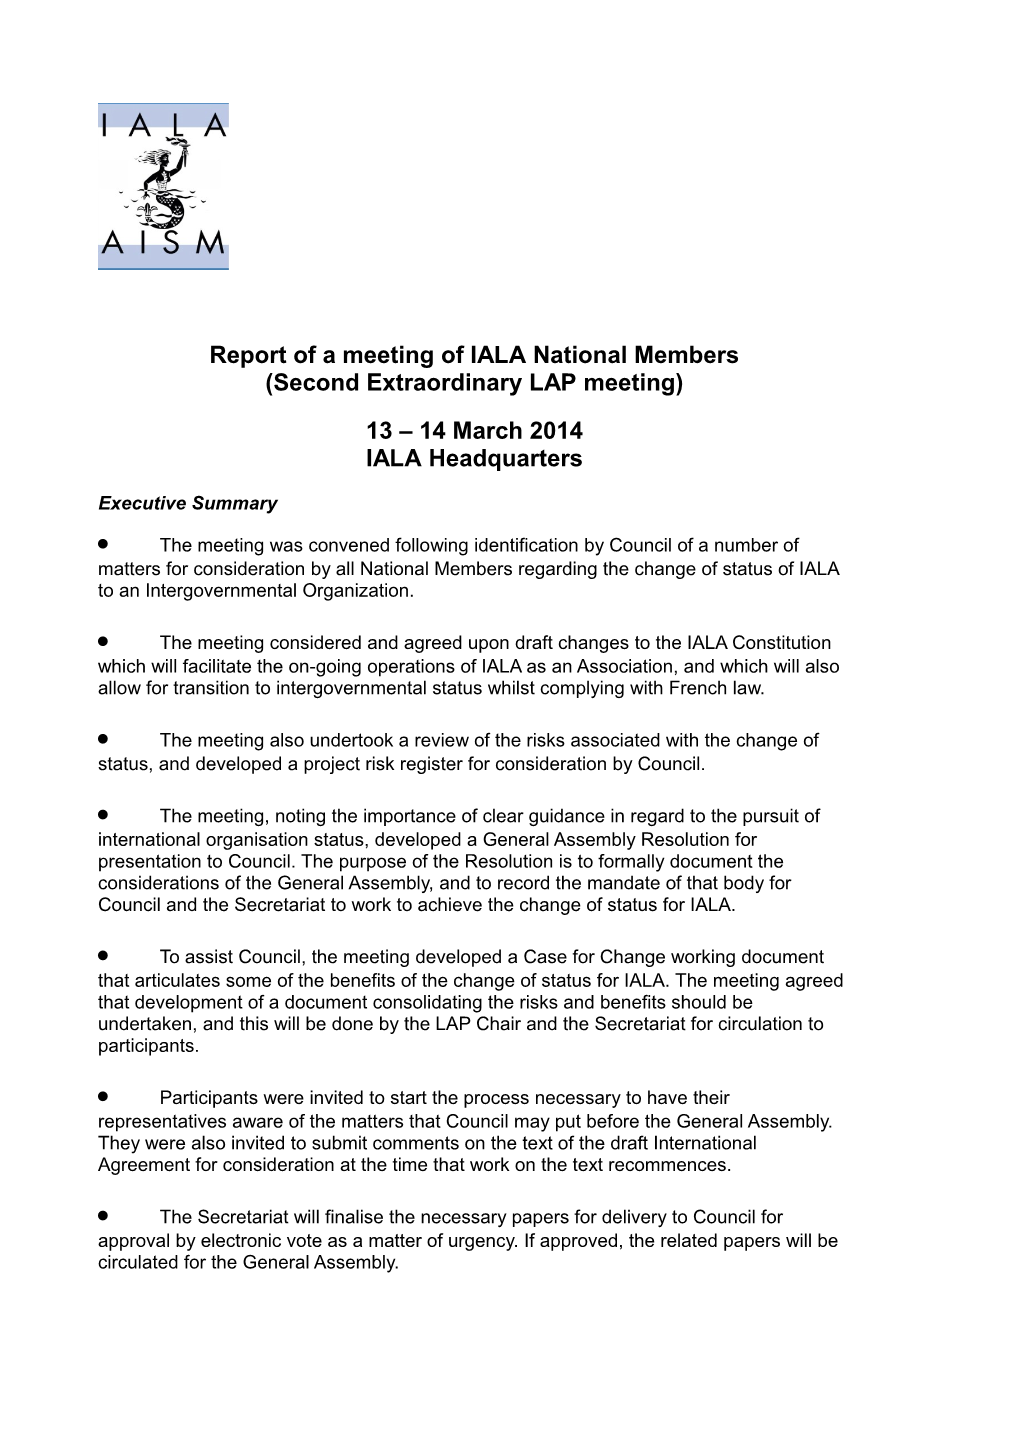 Report of a Meeting of IALA National Members